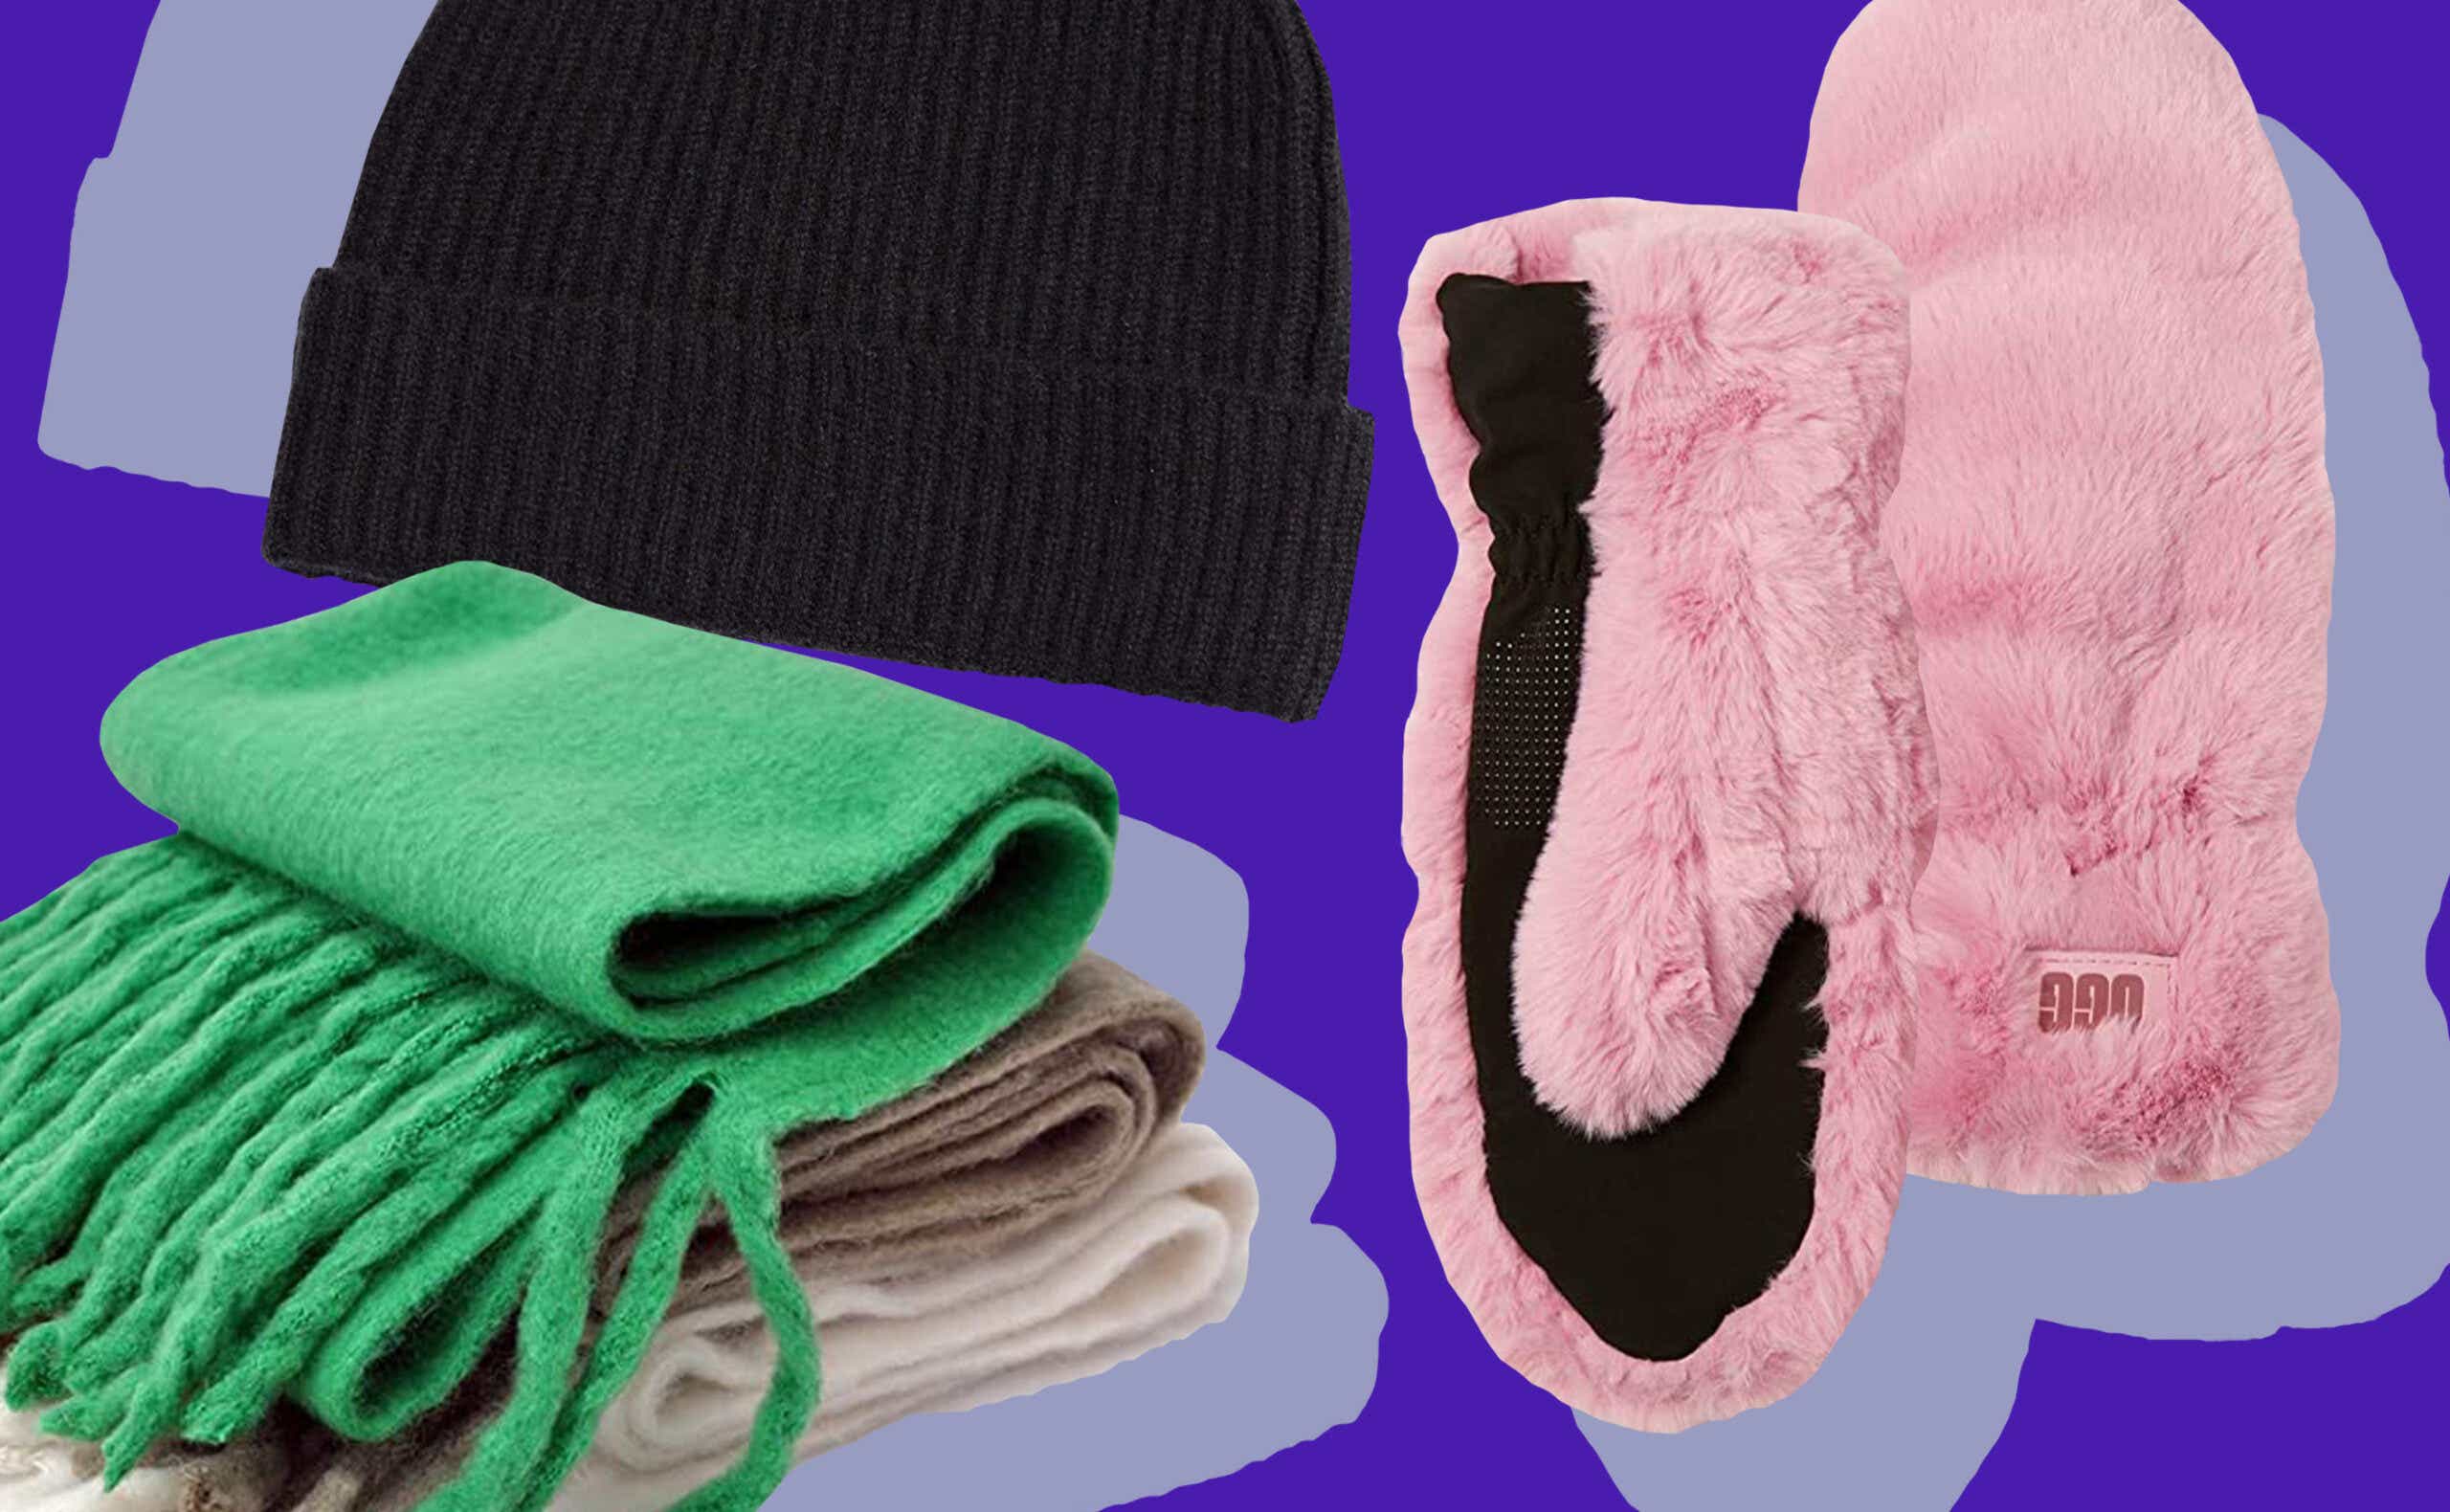 Winter Plaid Fleece Hat Gloves & Scarf Set For Women